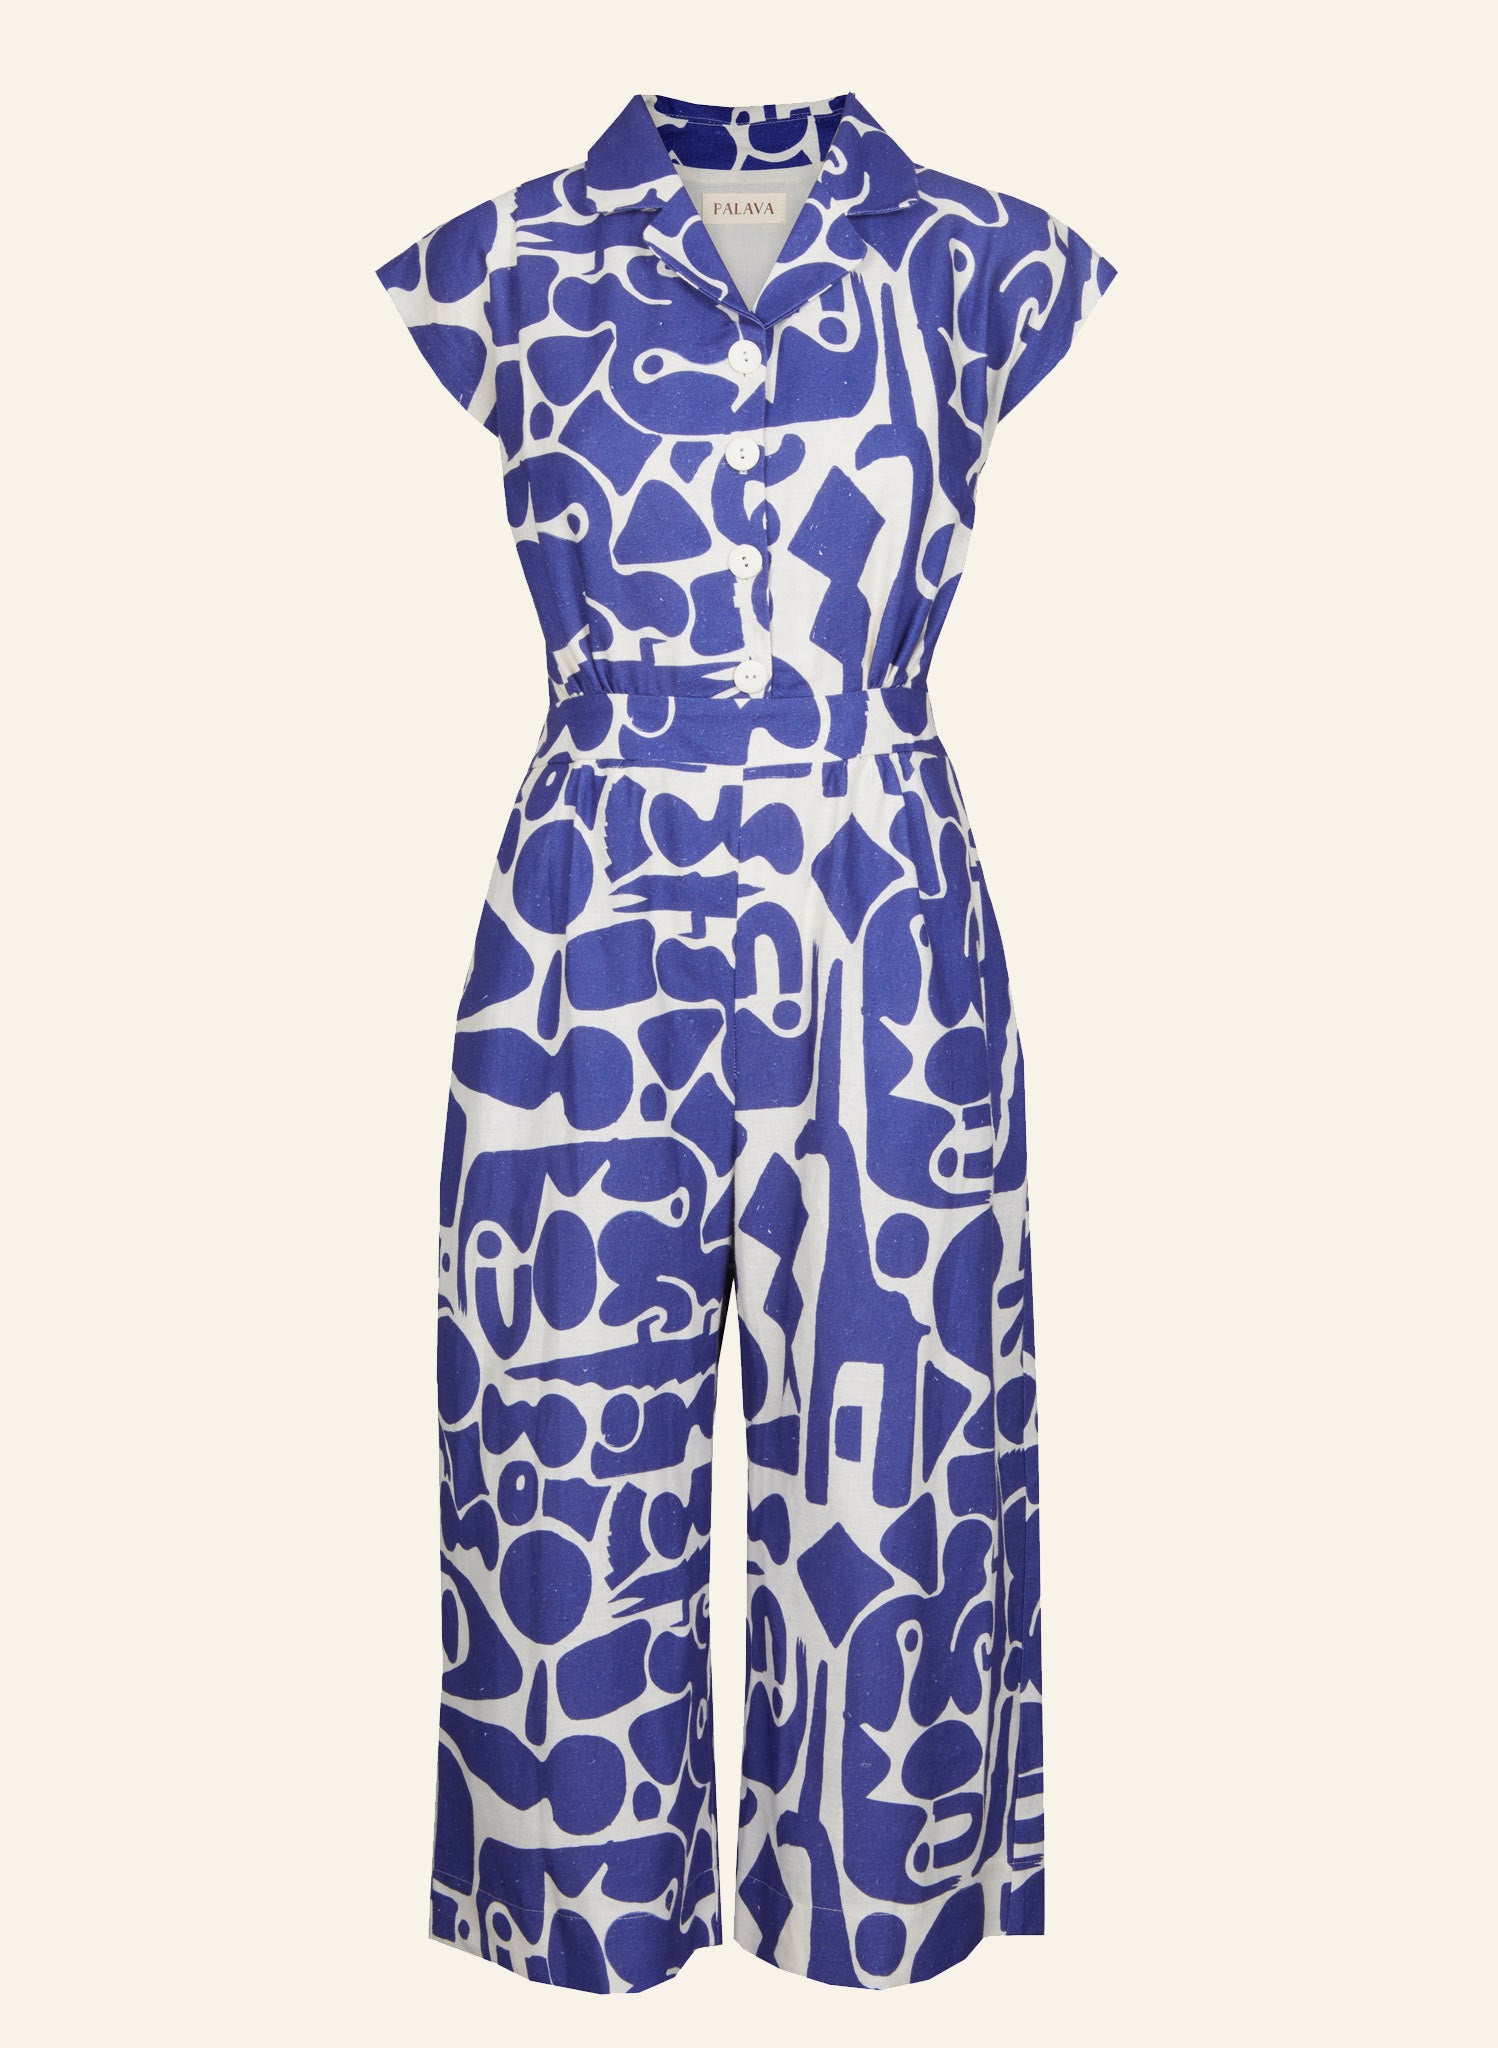 Palava Francesca Jumpsuit in Blue Cave Design Printed on Cotton Linen Blend